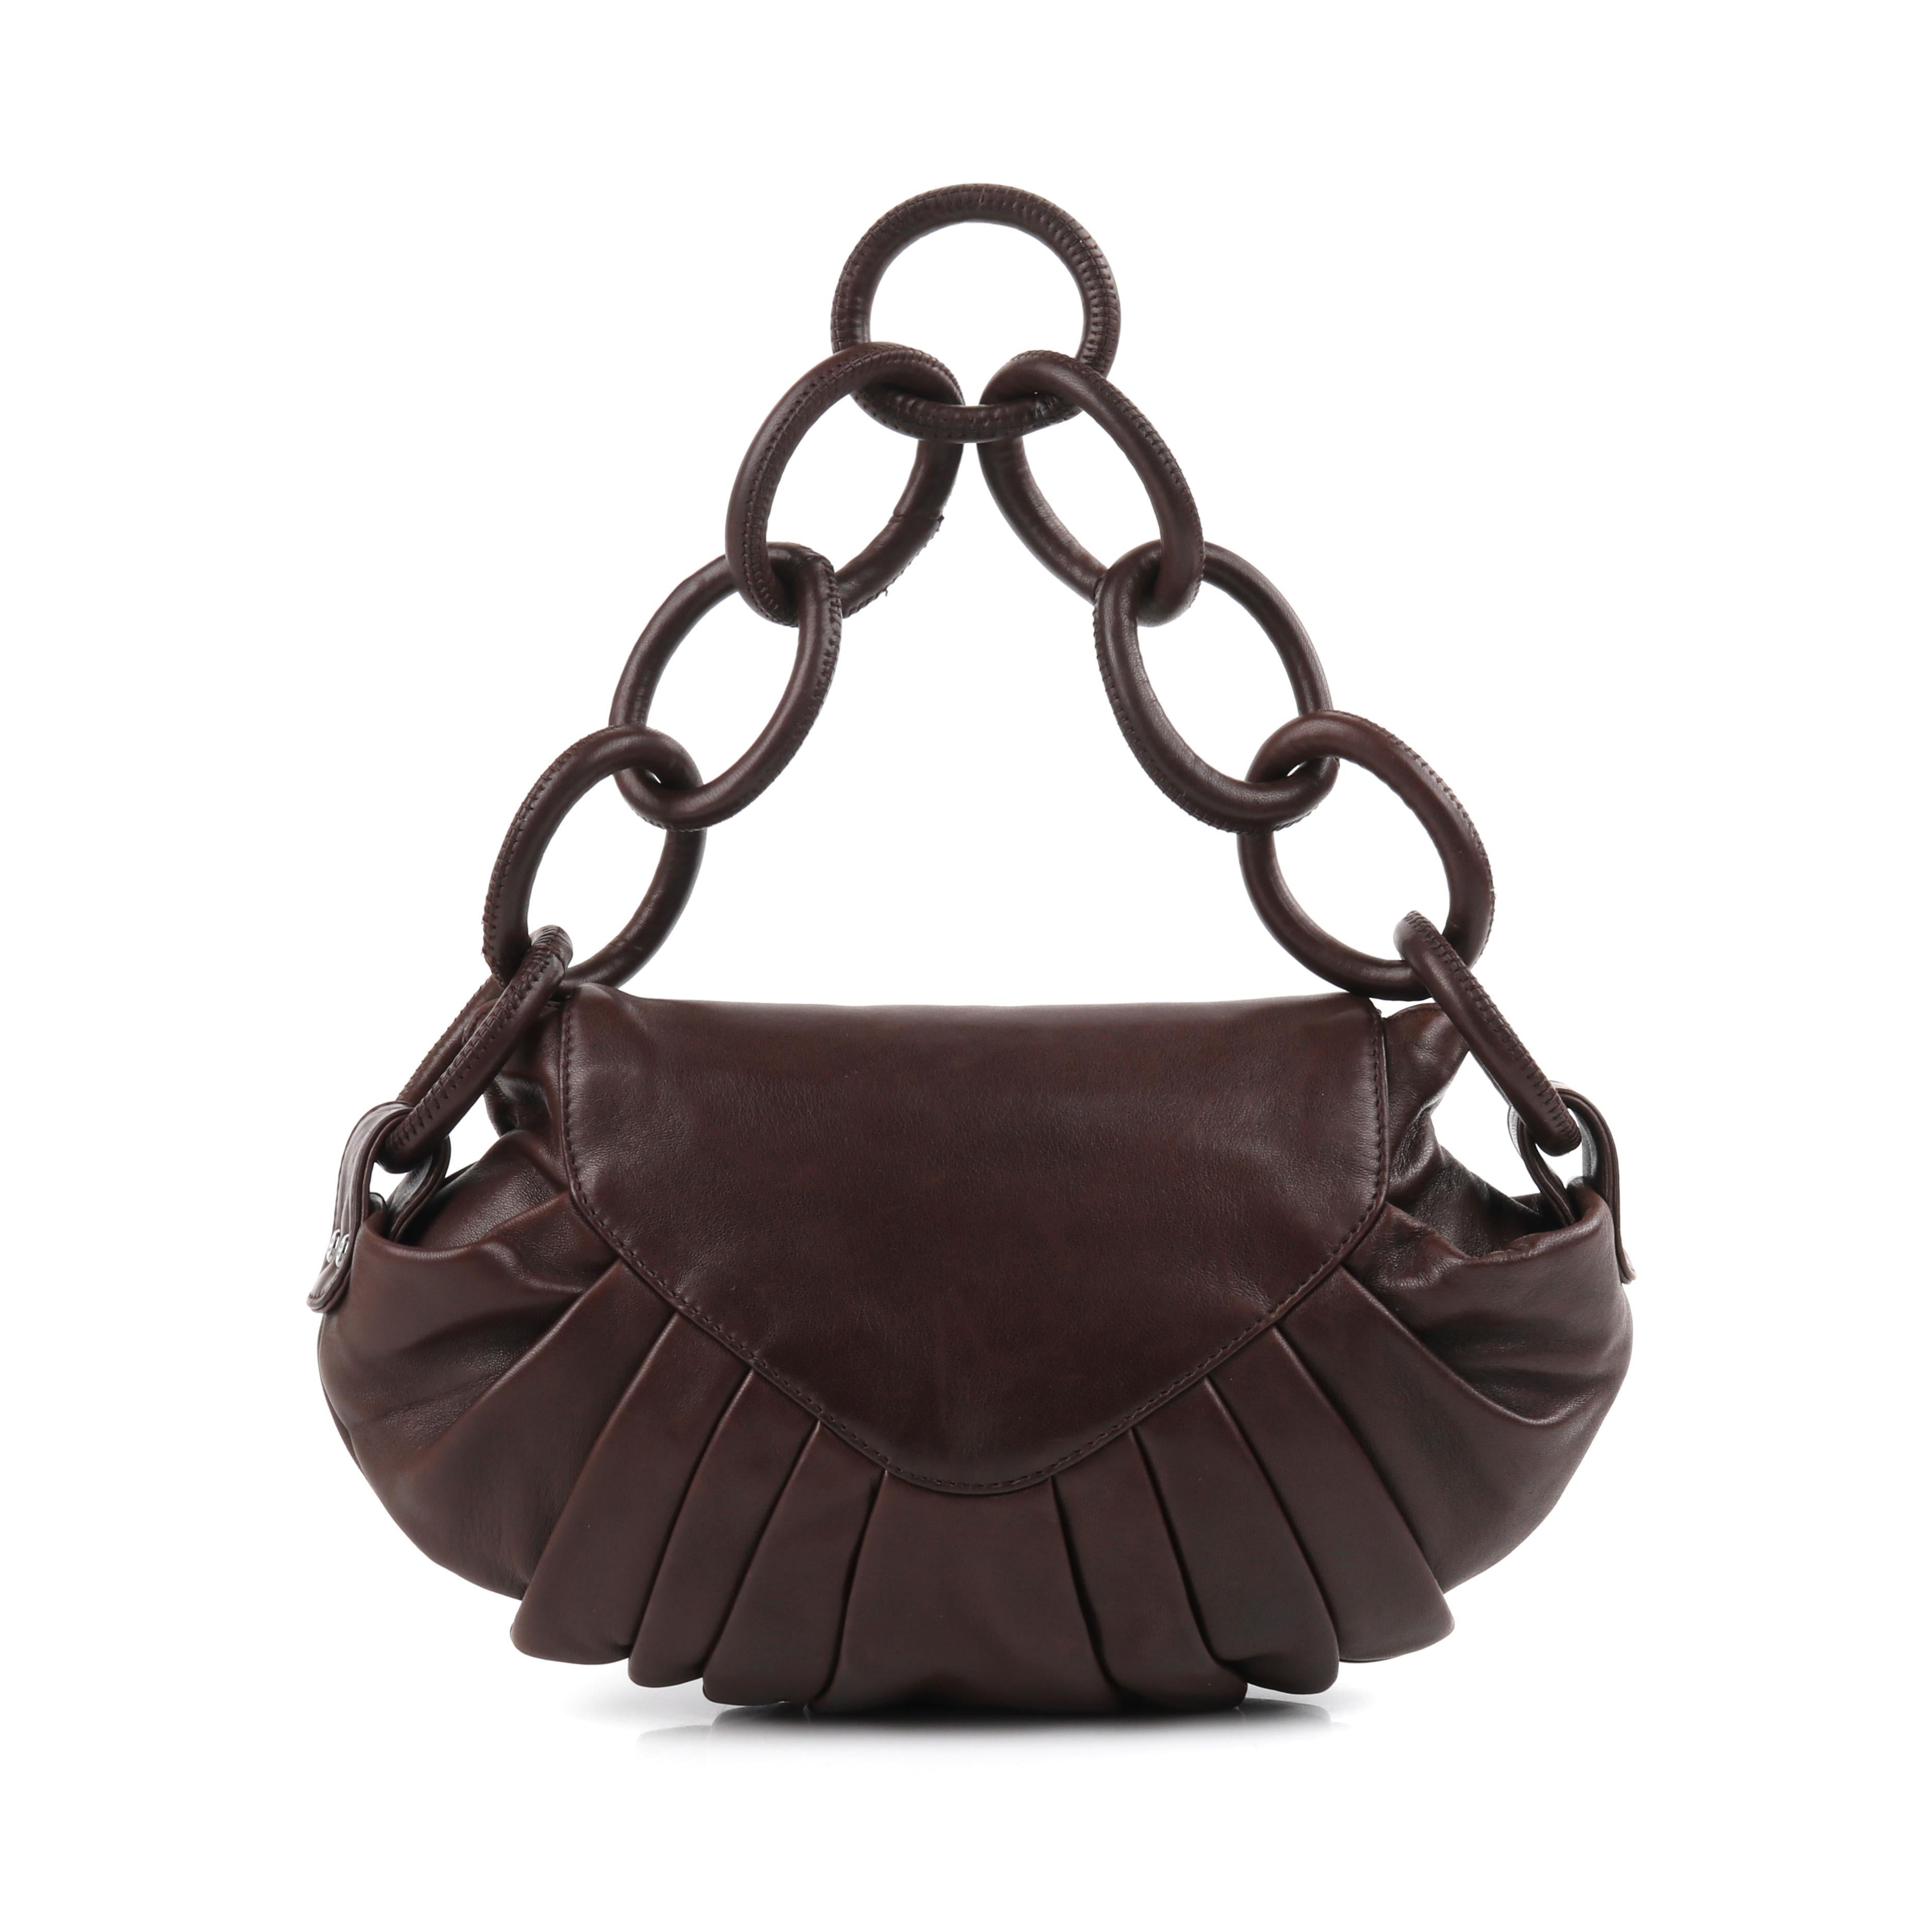 CHANEL c.2004 Hickory Brown Lambskin Leather Pleated Chain-Link Shoulder Bag
 
Estimated Retail: $1,750.00
 
Brand / Manufacturer: Chanel
Collection: c.2004
Designer: Karl Lagerfeld
Style: Handbag / shoulder bag
Color(s): Shades of dark brown